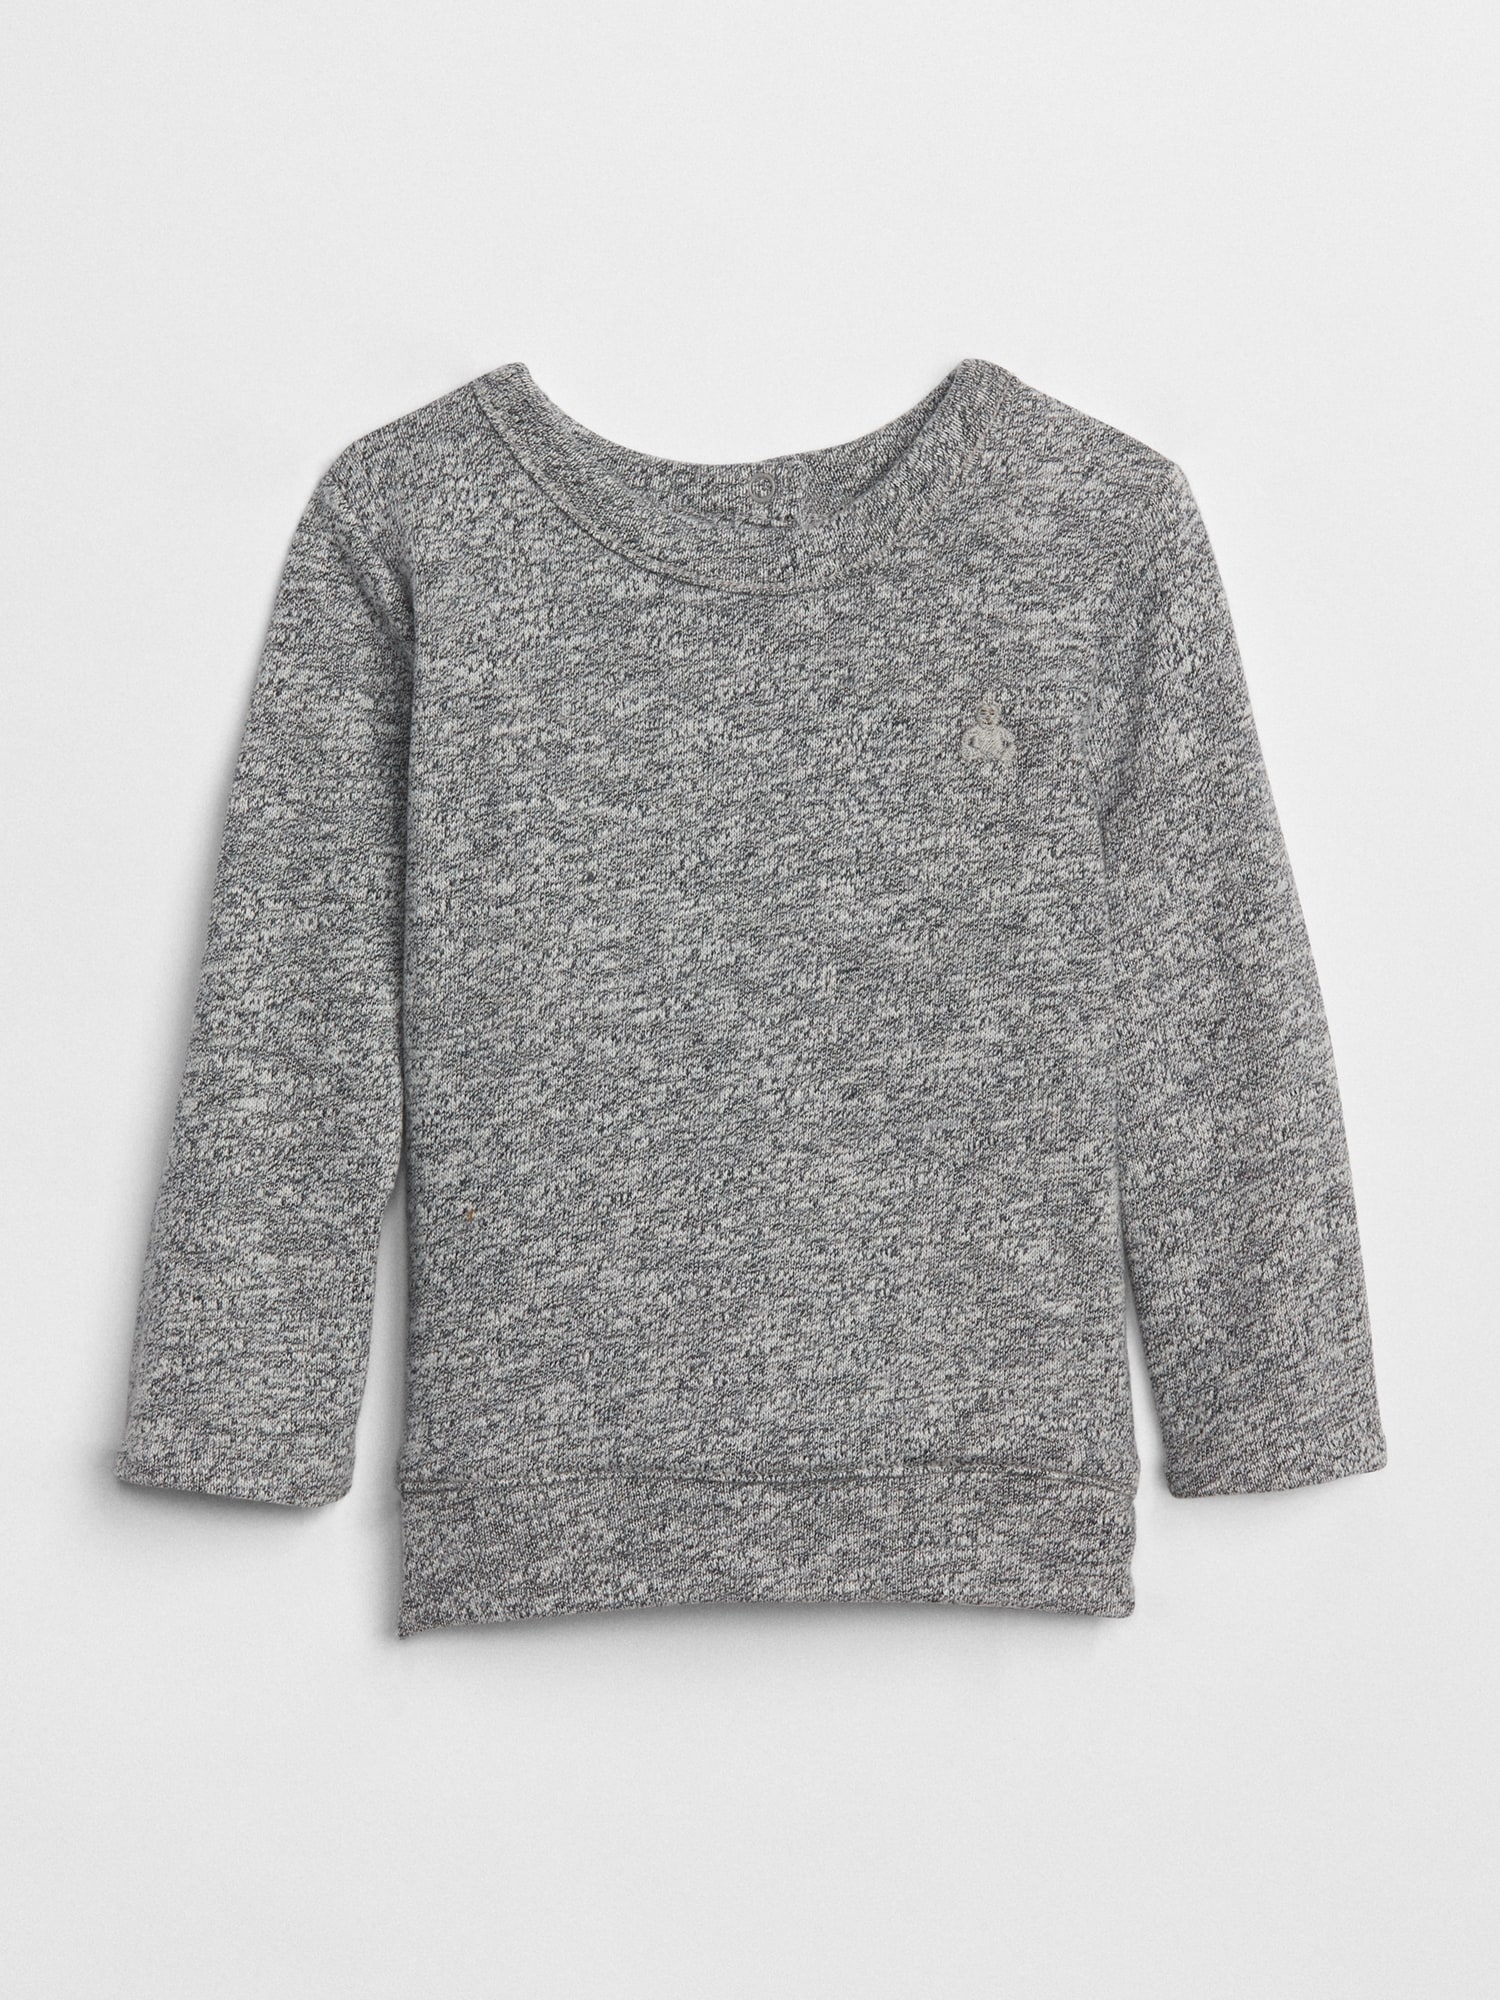 Baby Favorite Reversible Pullover Sweater | Gap